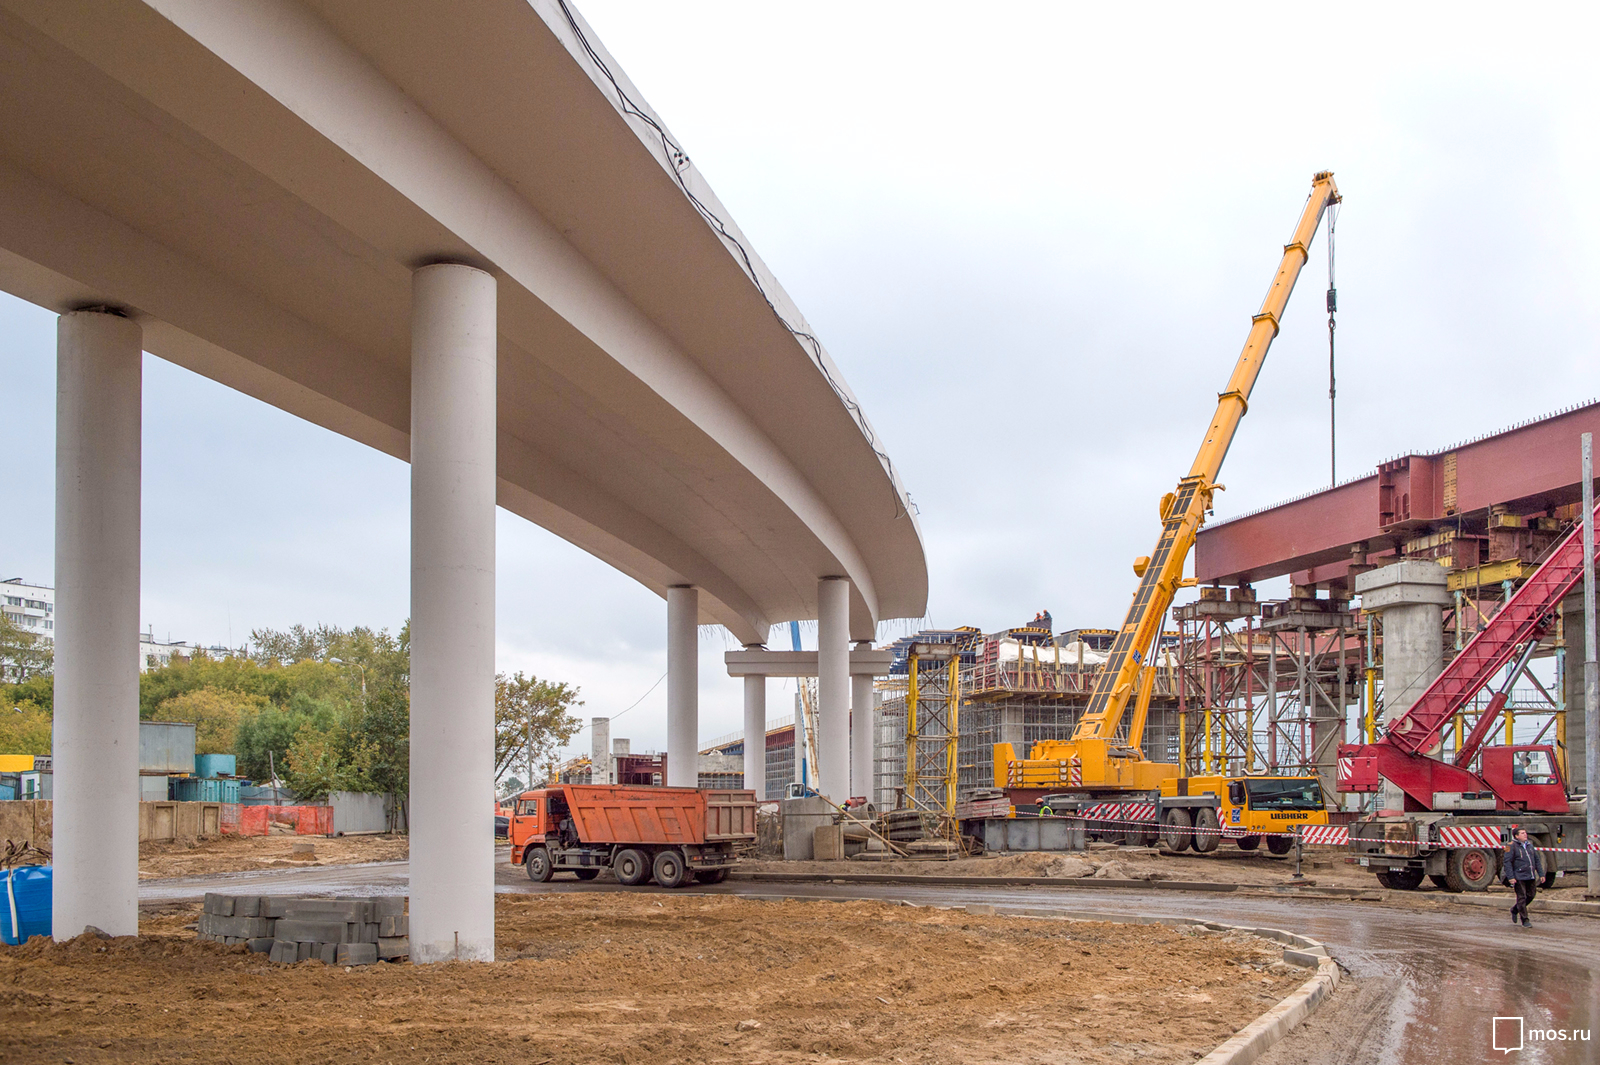 Более 300 км дорог построят в Москве за счет бюджета до 2020 года